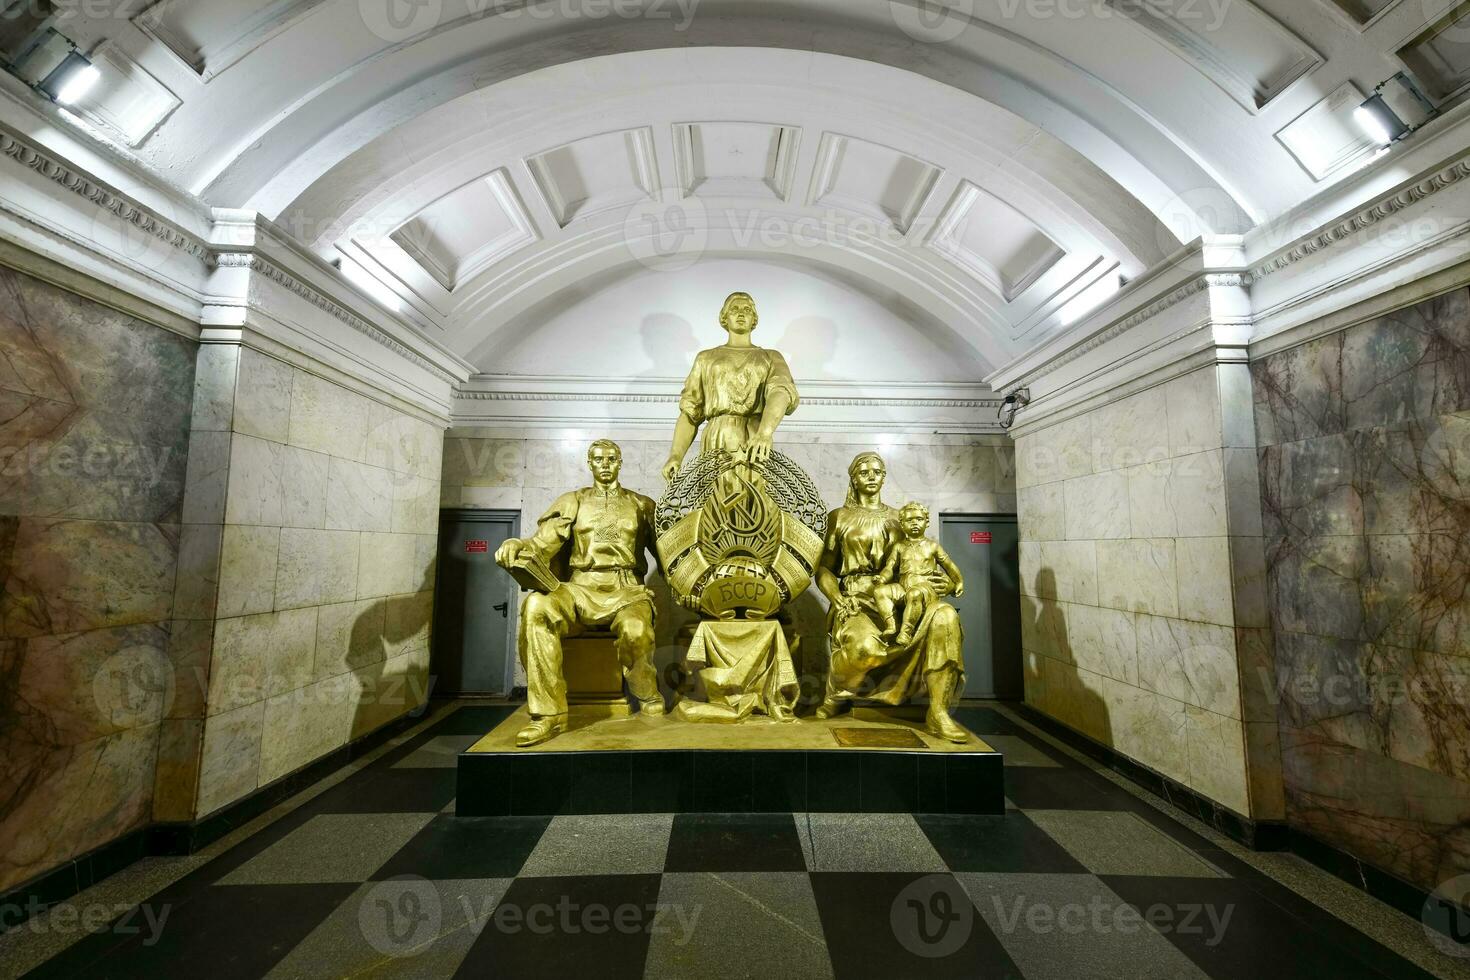 belorusskaja metro station - Moskou, Rusland foto